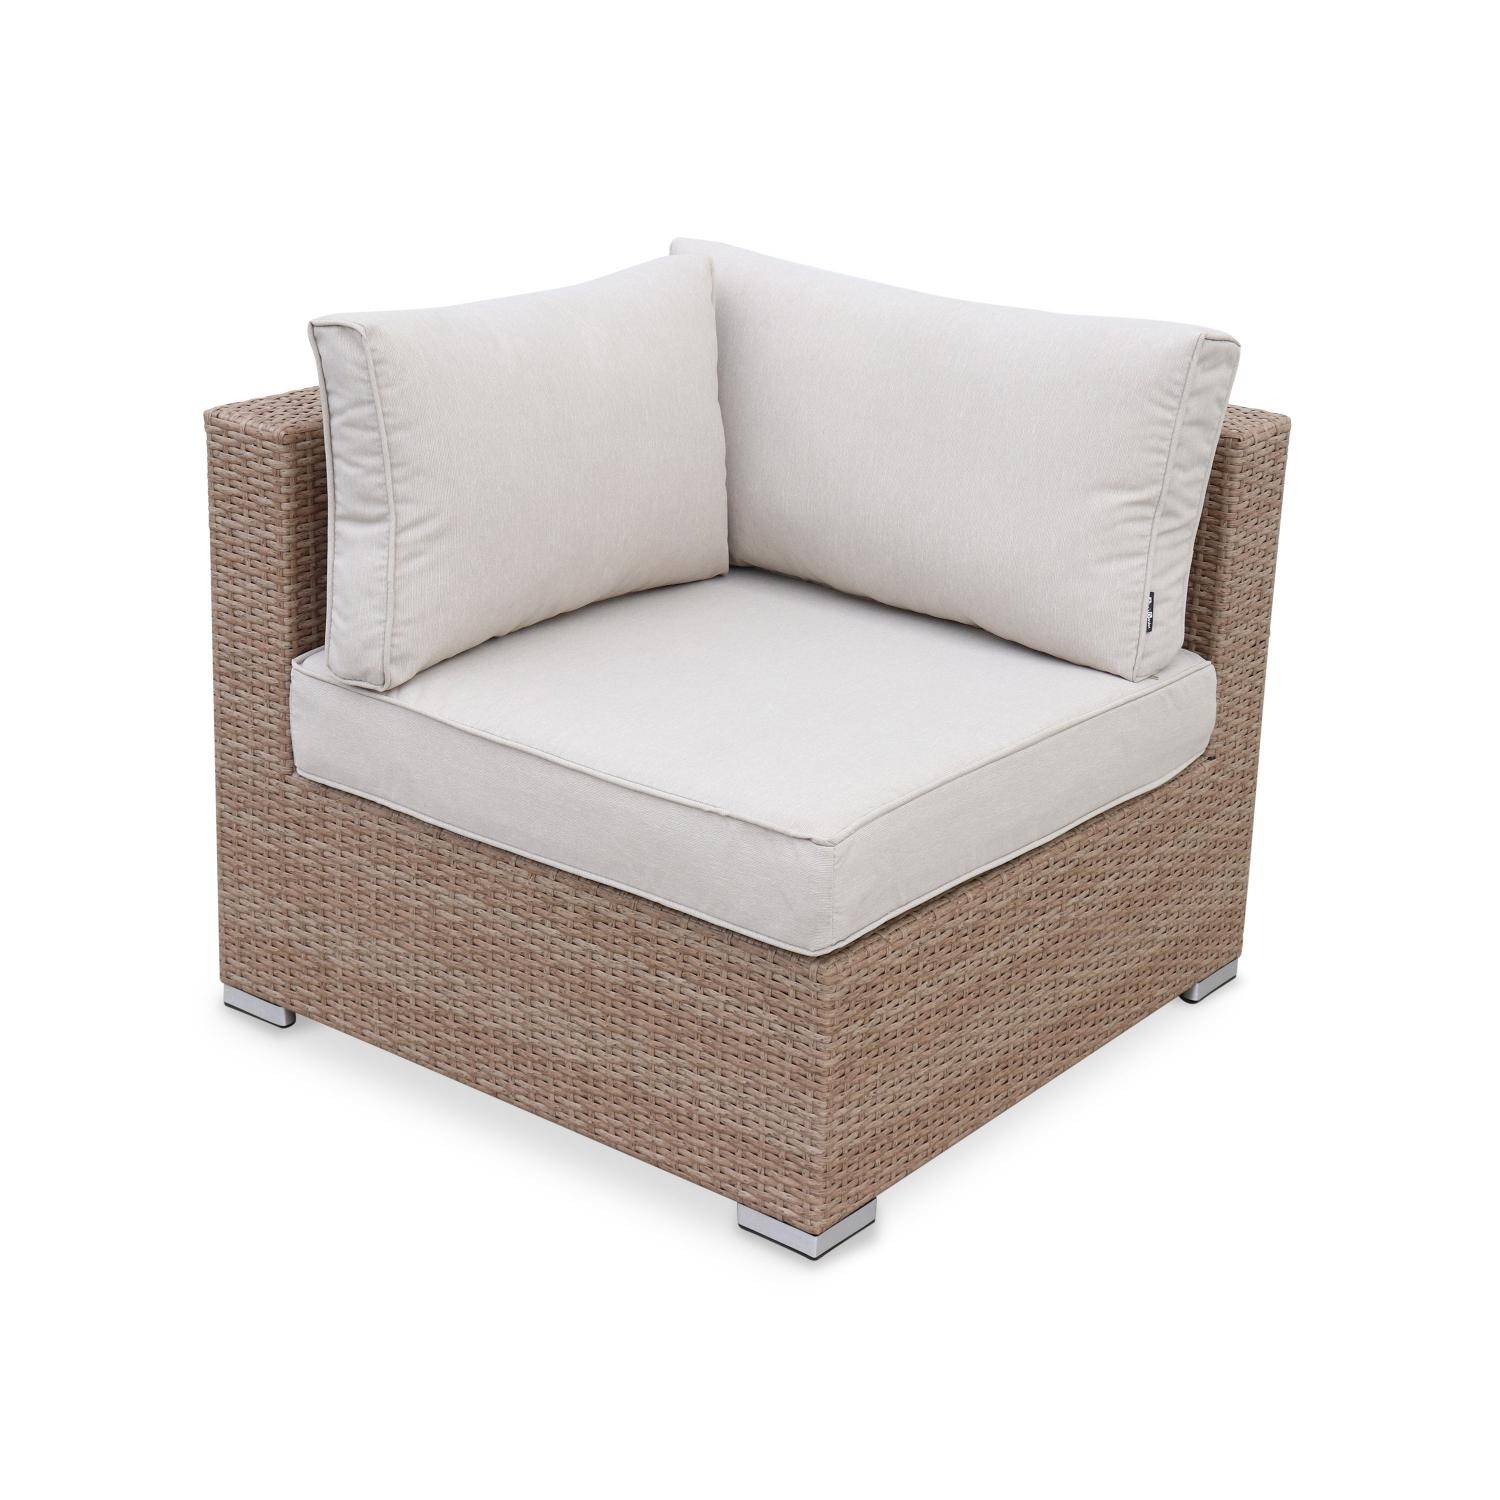 Ready assembled 5-seater polyrattan corner garden sofa set with coffee table, Napoli. Beige,sweeek,Photo4